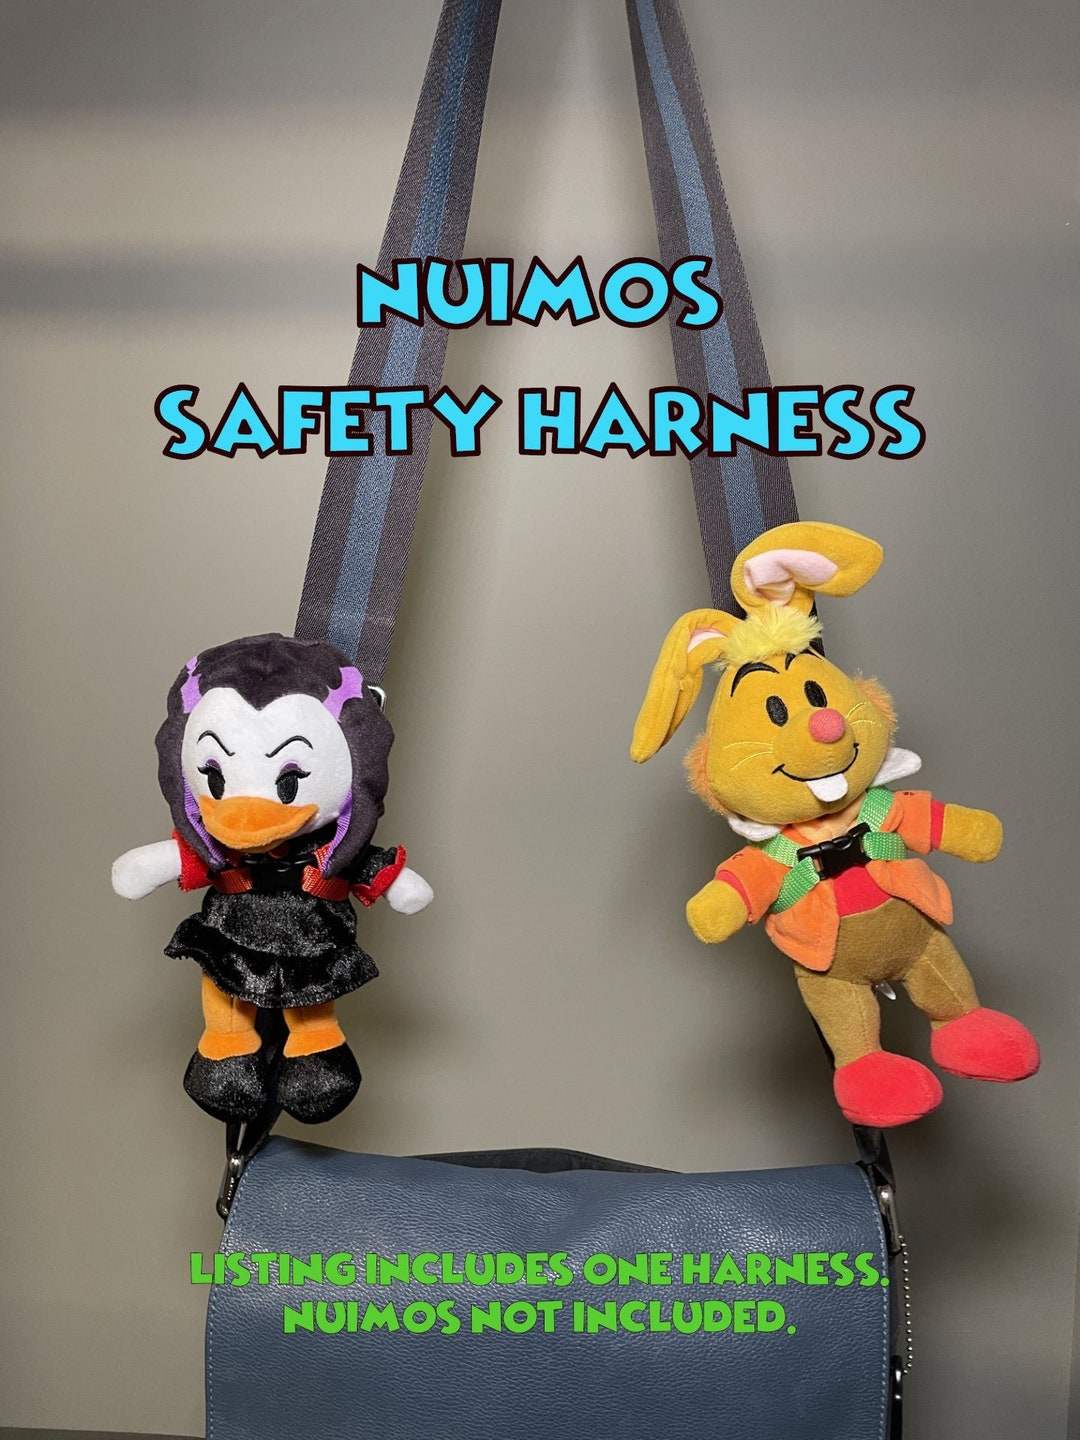 Disney NuiMOs! Disney Store Display & Detailed Plush Review W